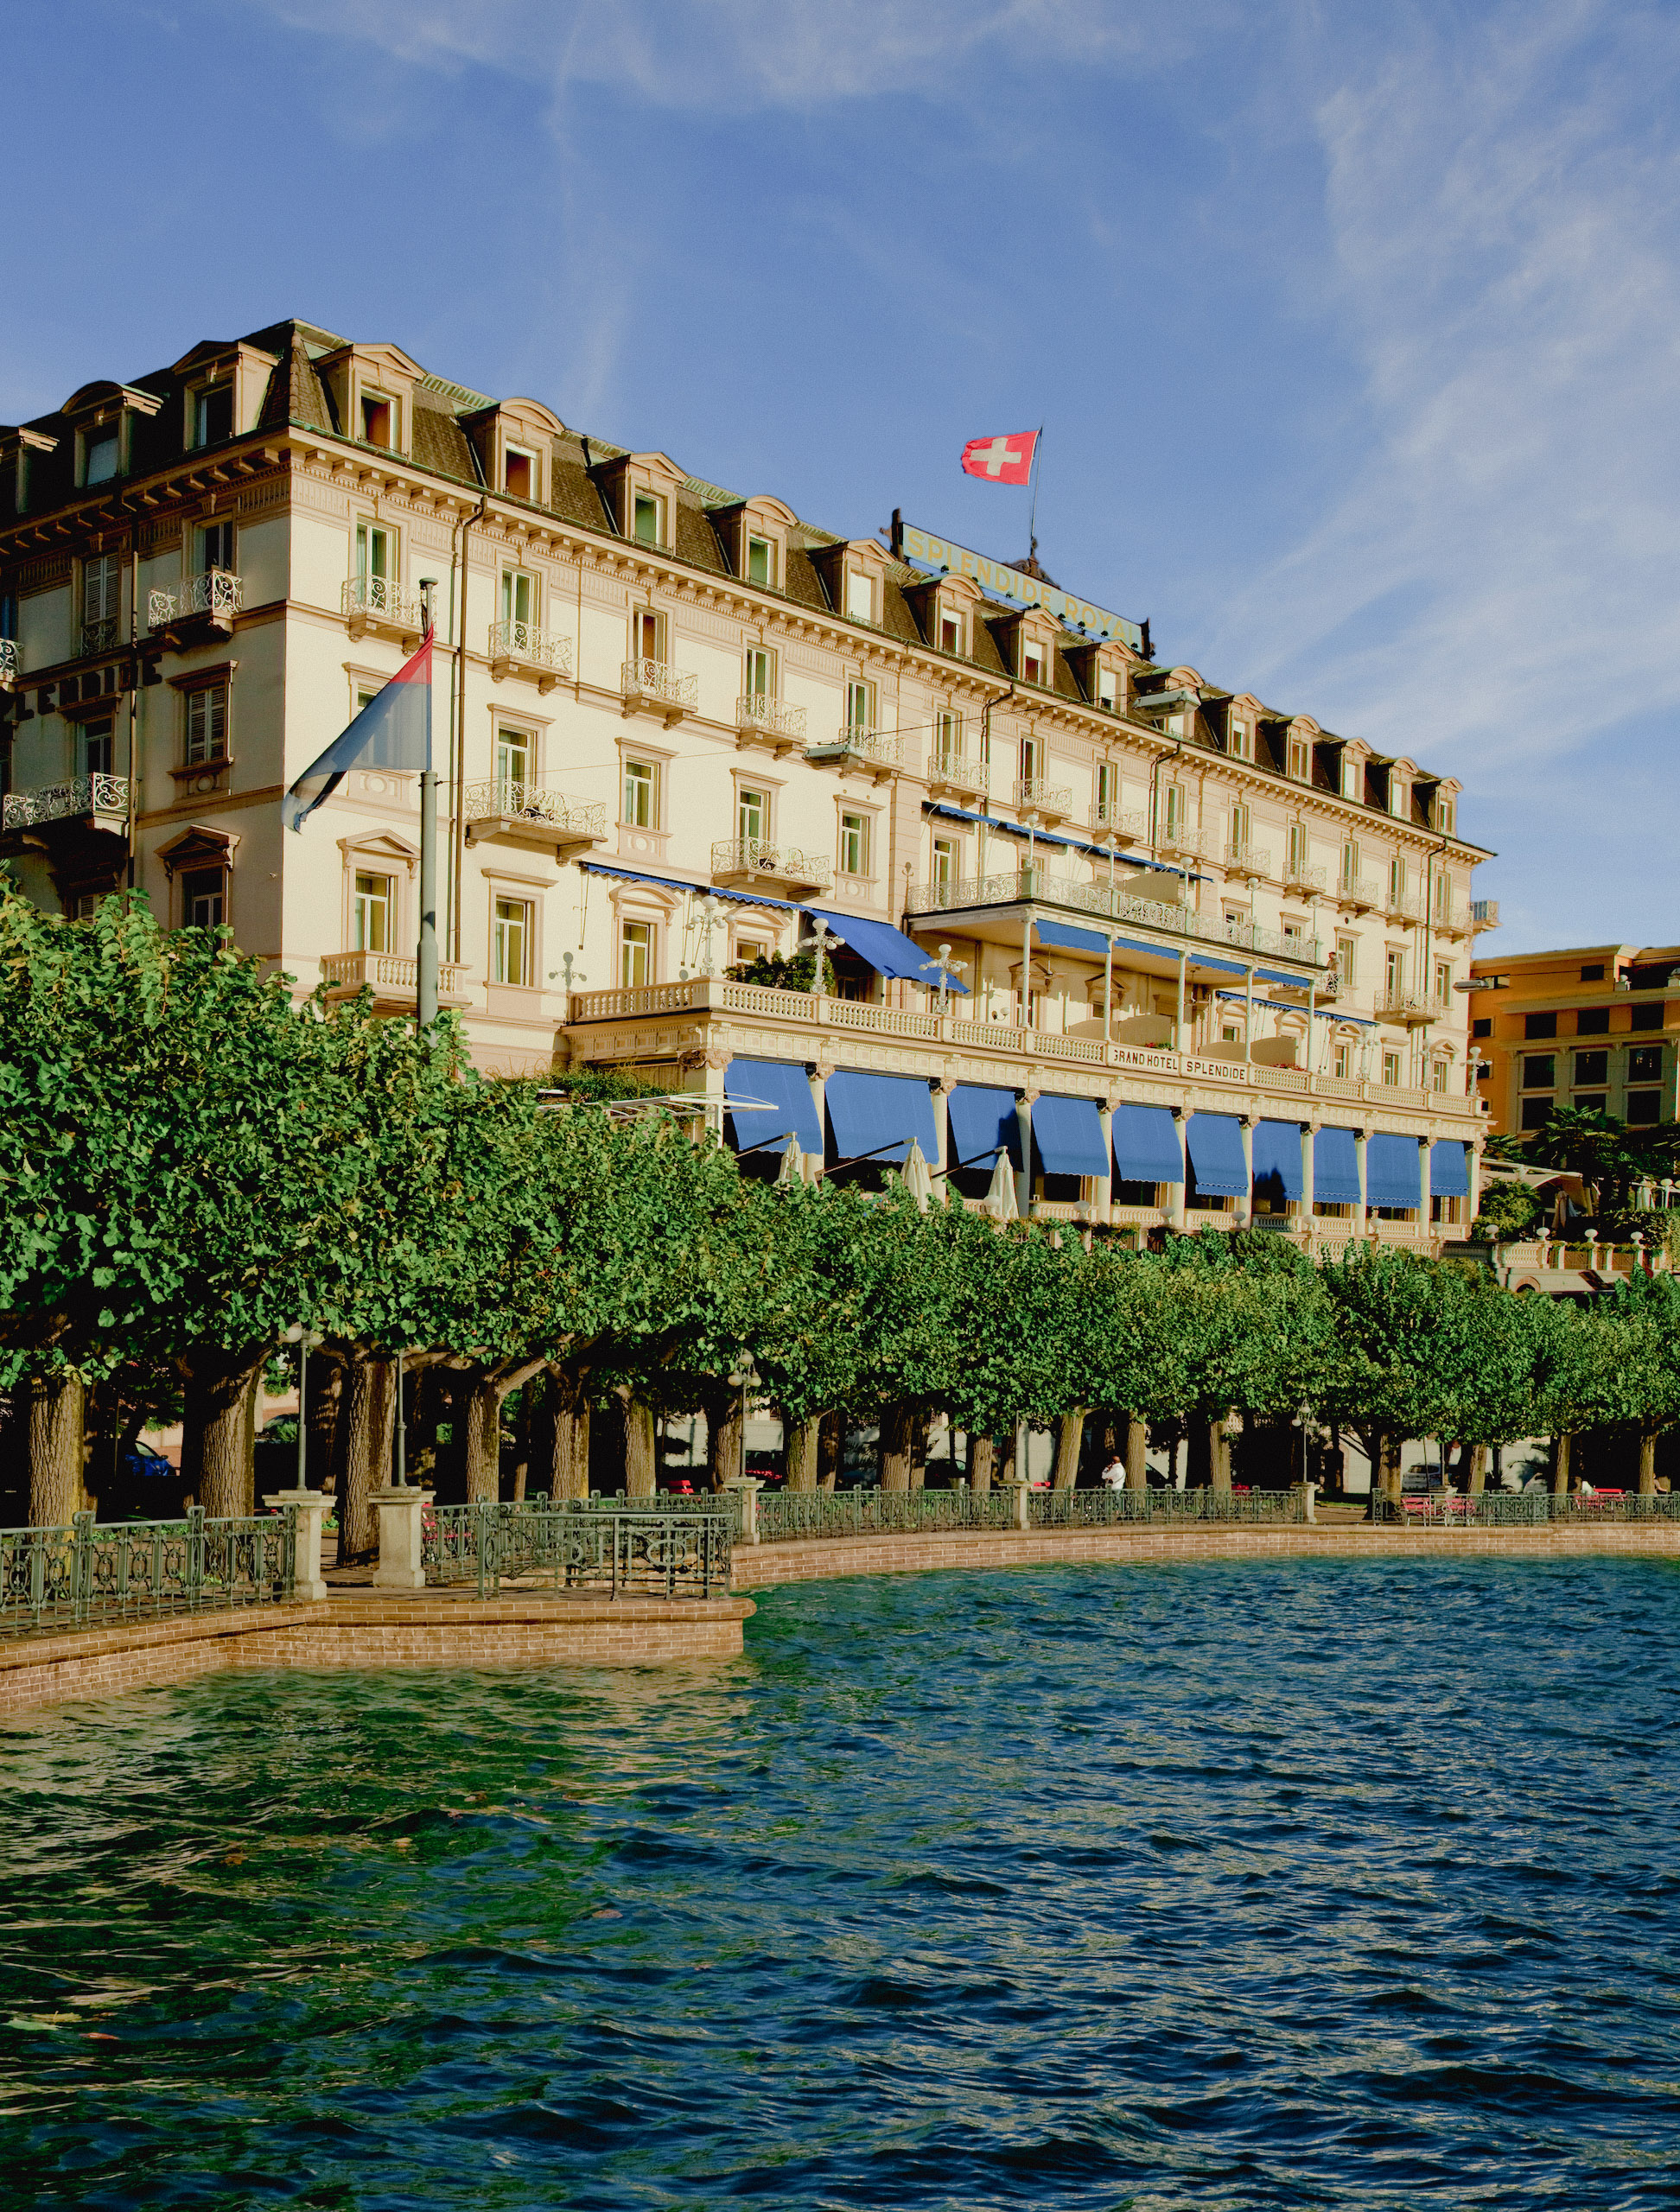 Splendide Royal Hotel Lugano Exterior From Water